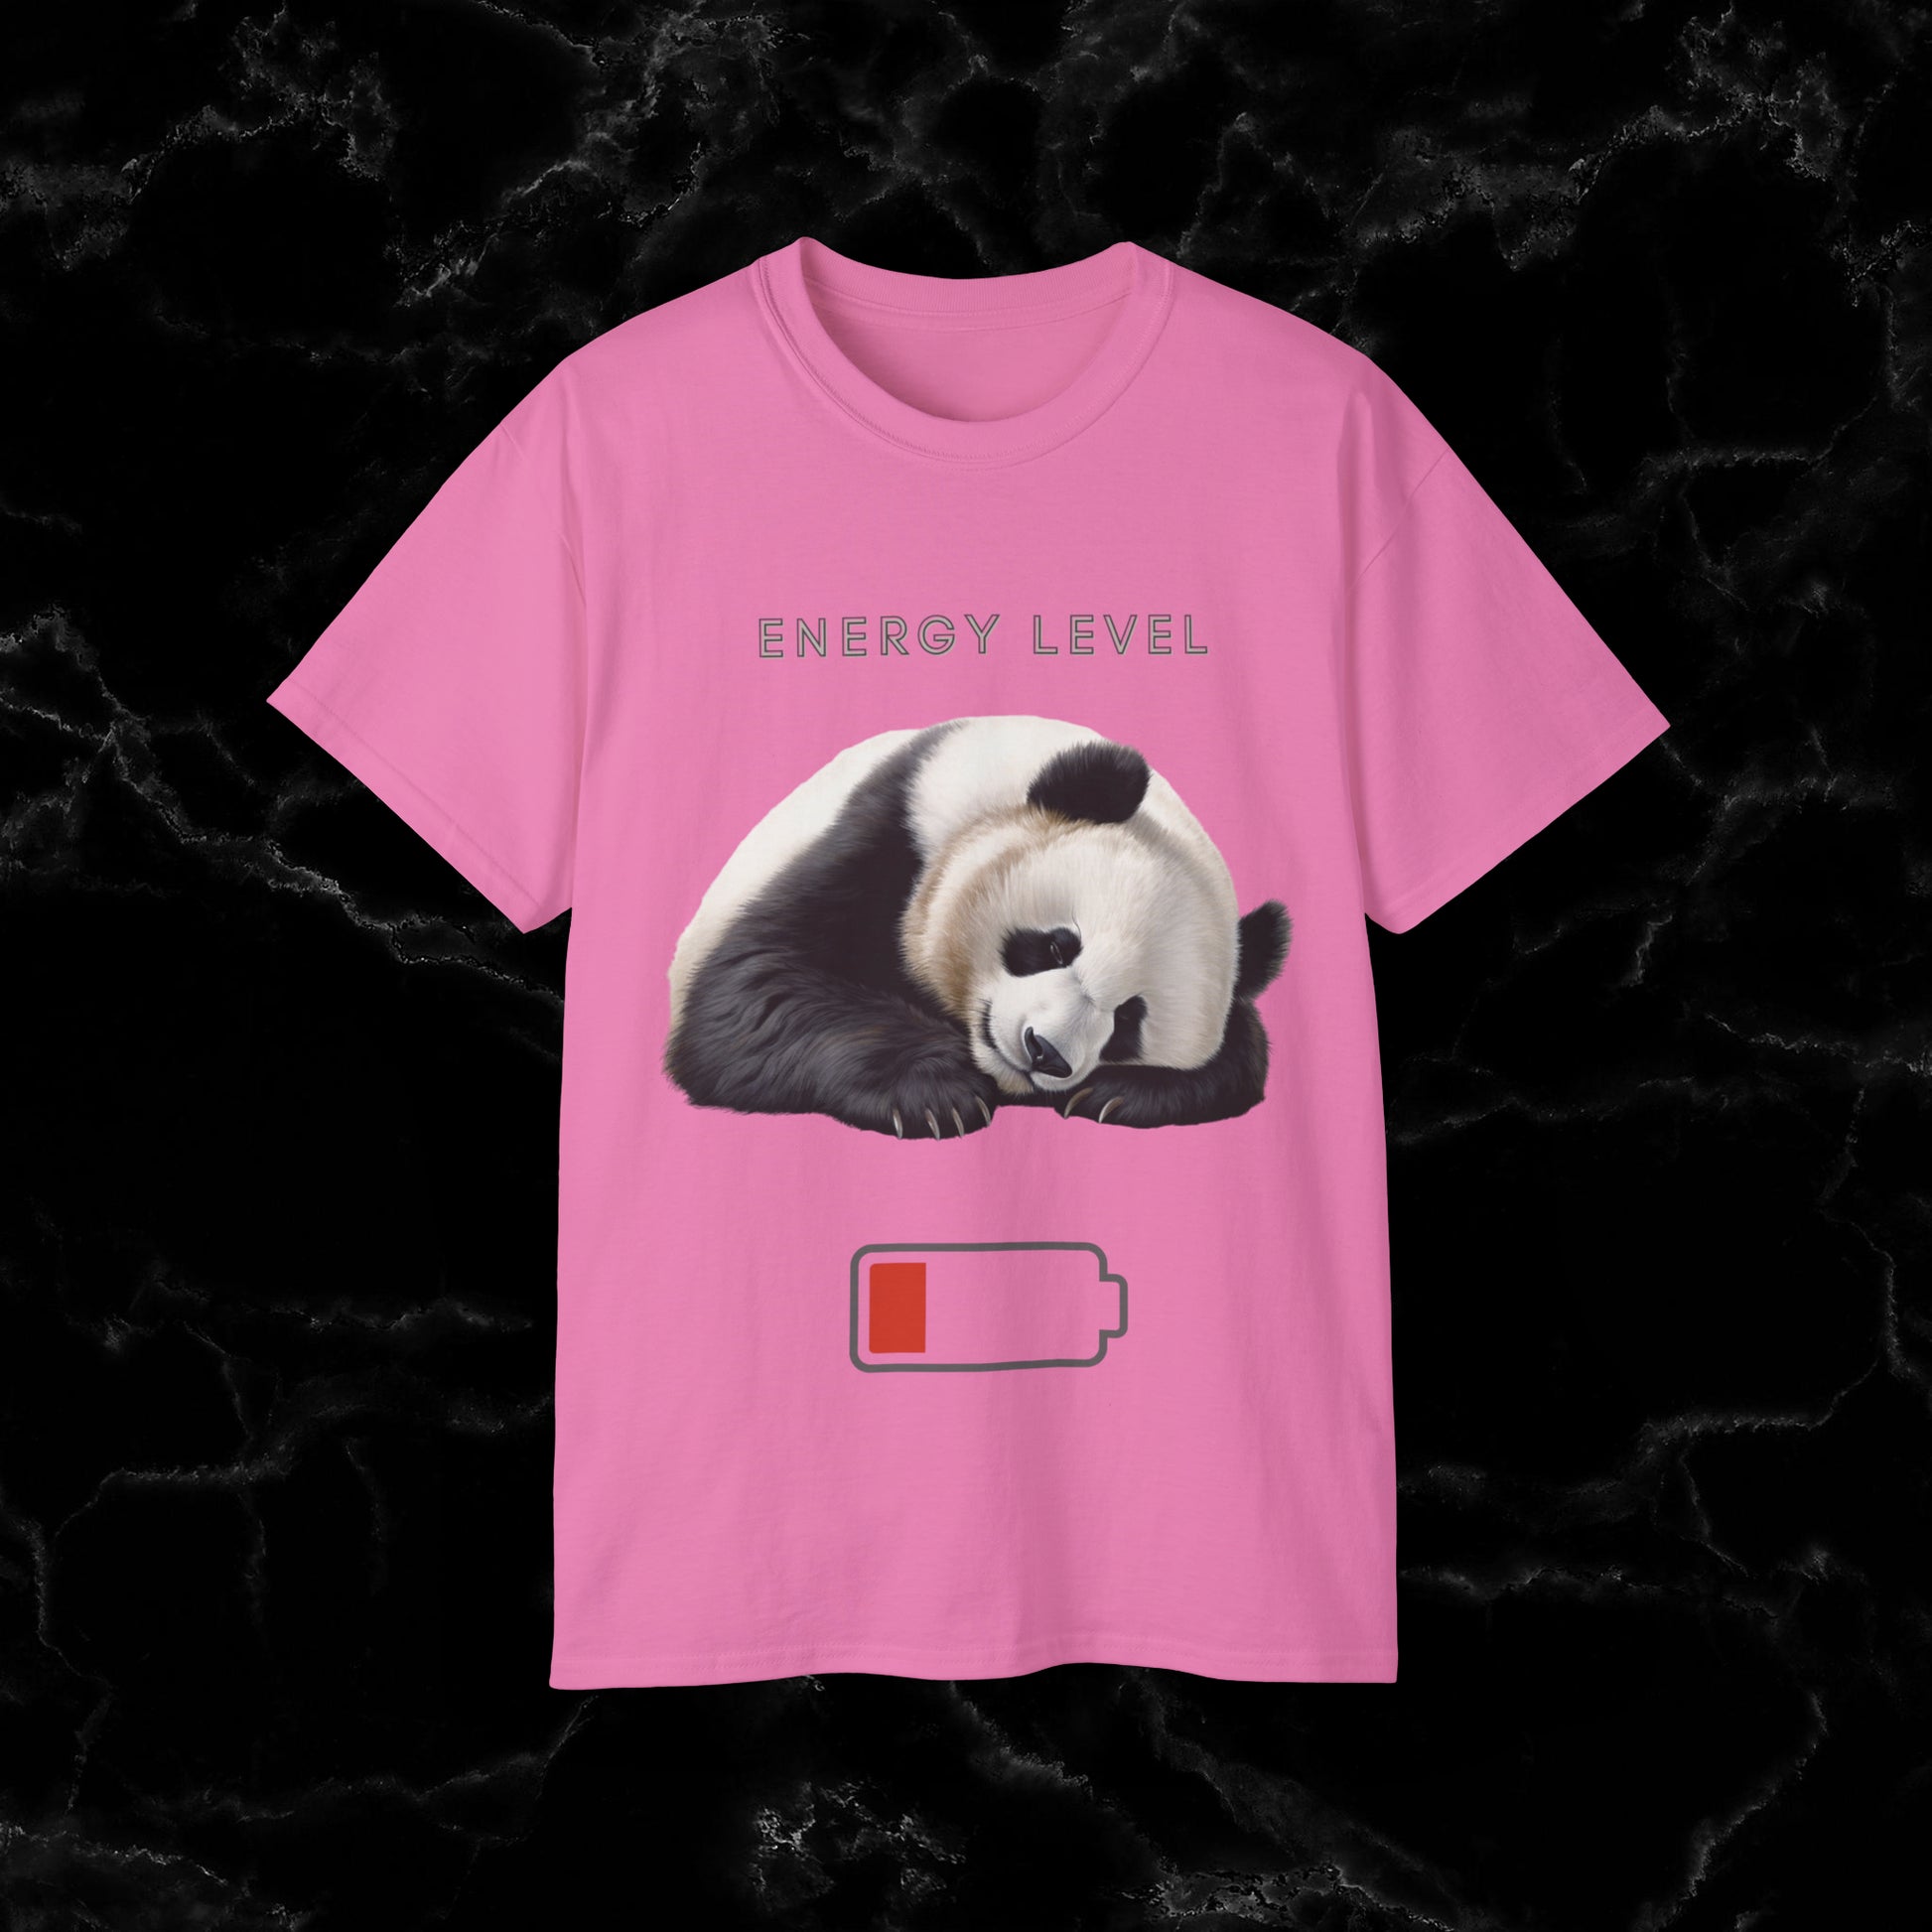 Nap Time Panda Unisex Funny Tee - Hilarious Panda Nap Design - Energy Level T-Shirt Azalea S 